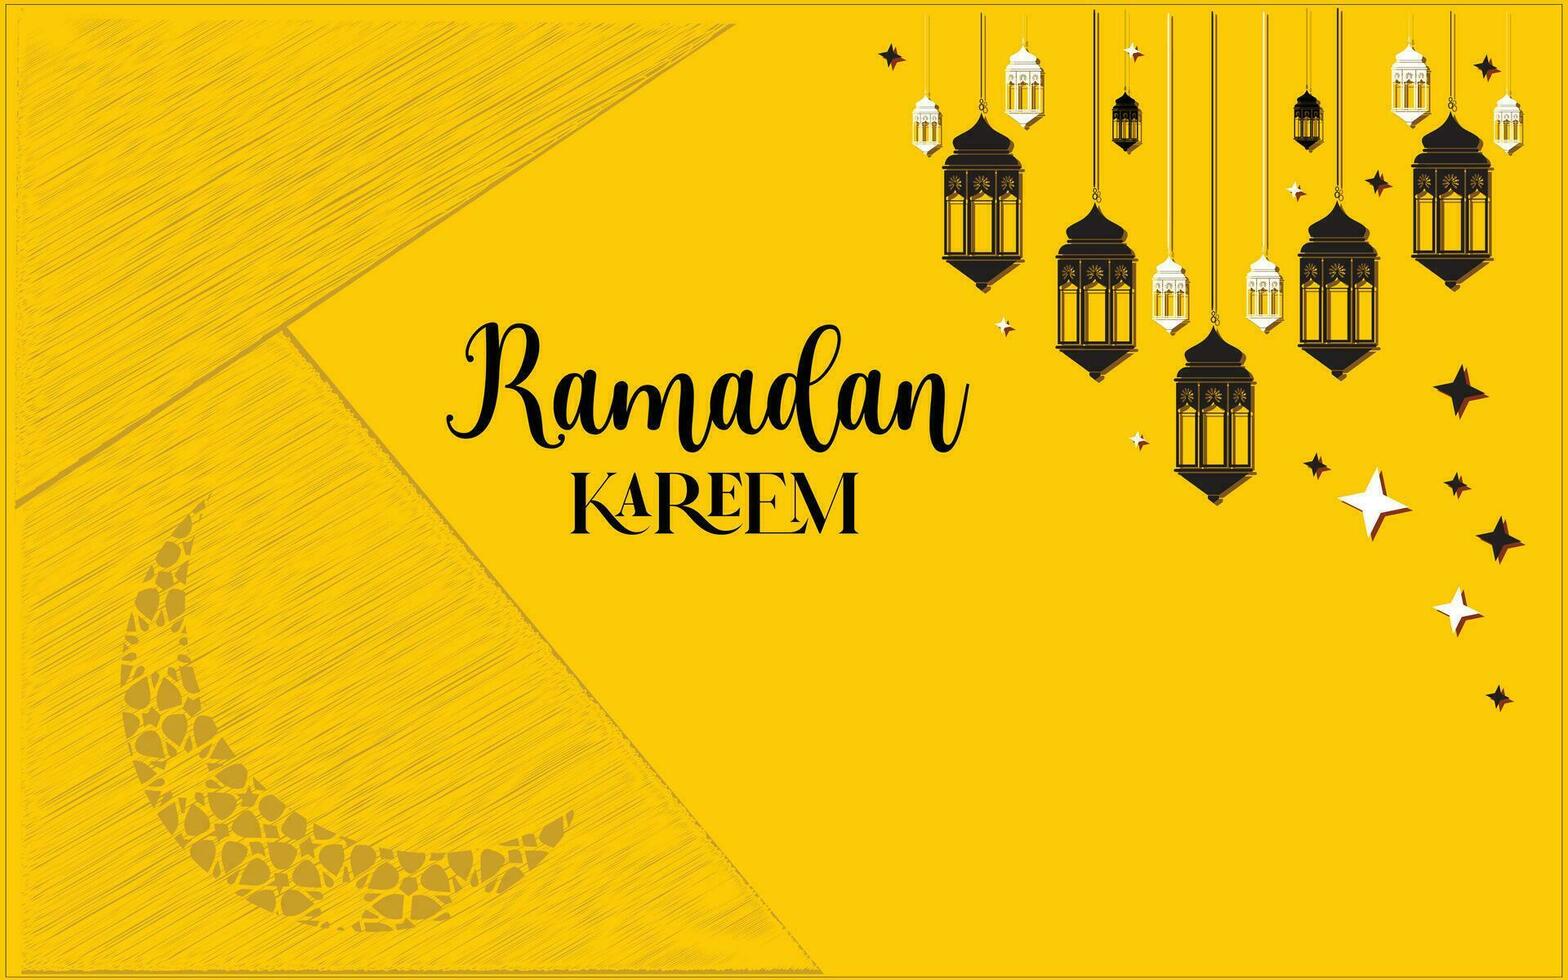 Free Vector Ramadan Kareem greeting card design for social media post and website.